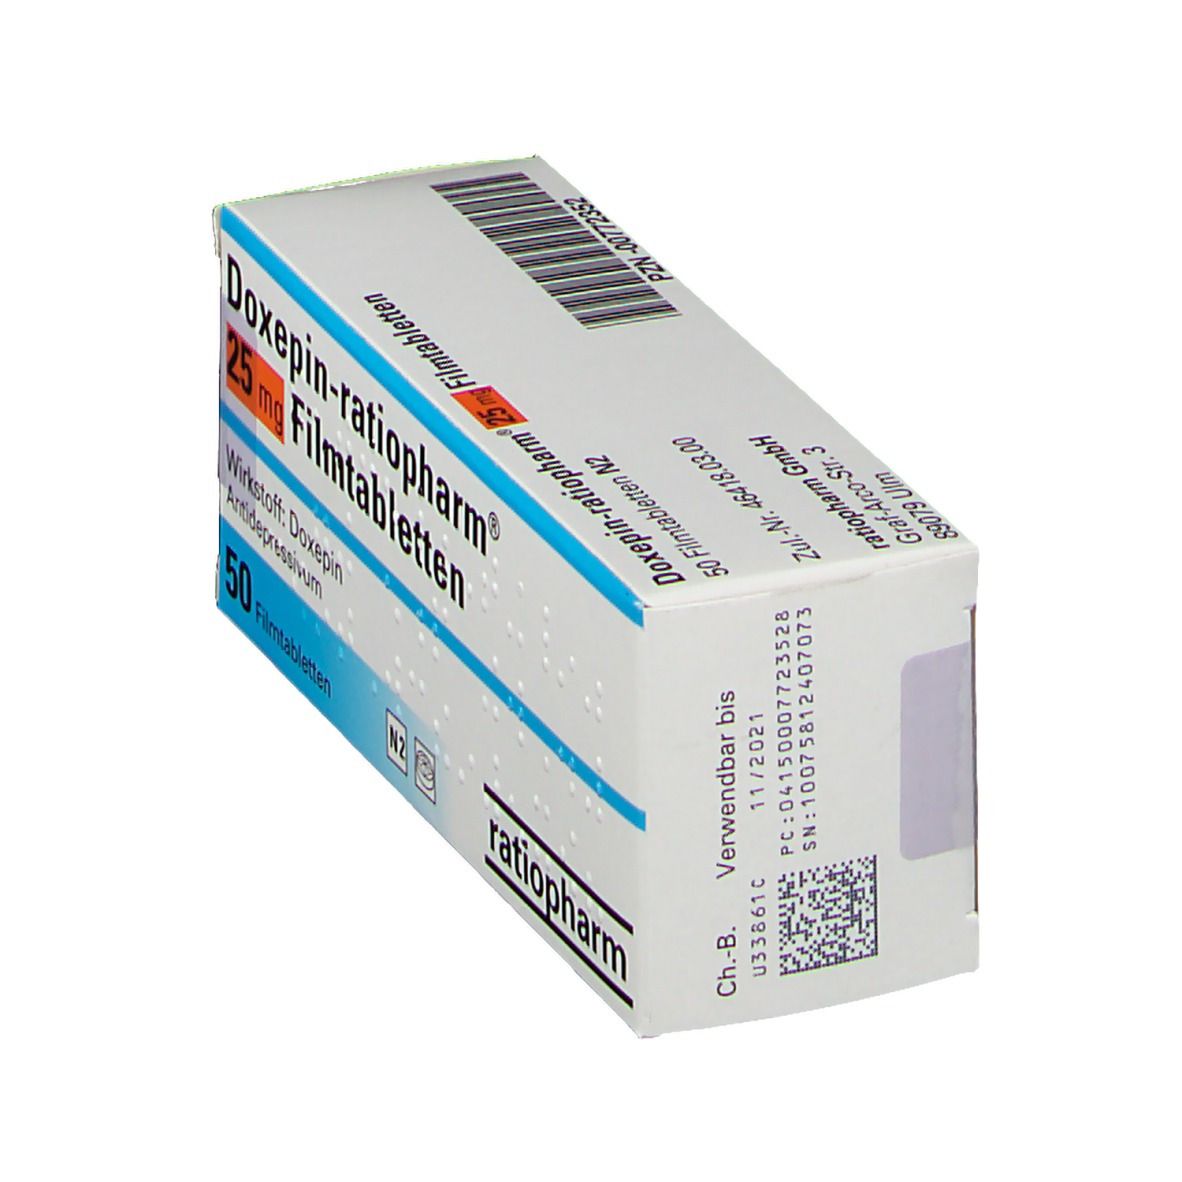 Doxepin-ratiopharm® 25 mg